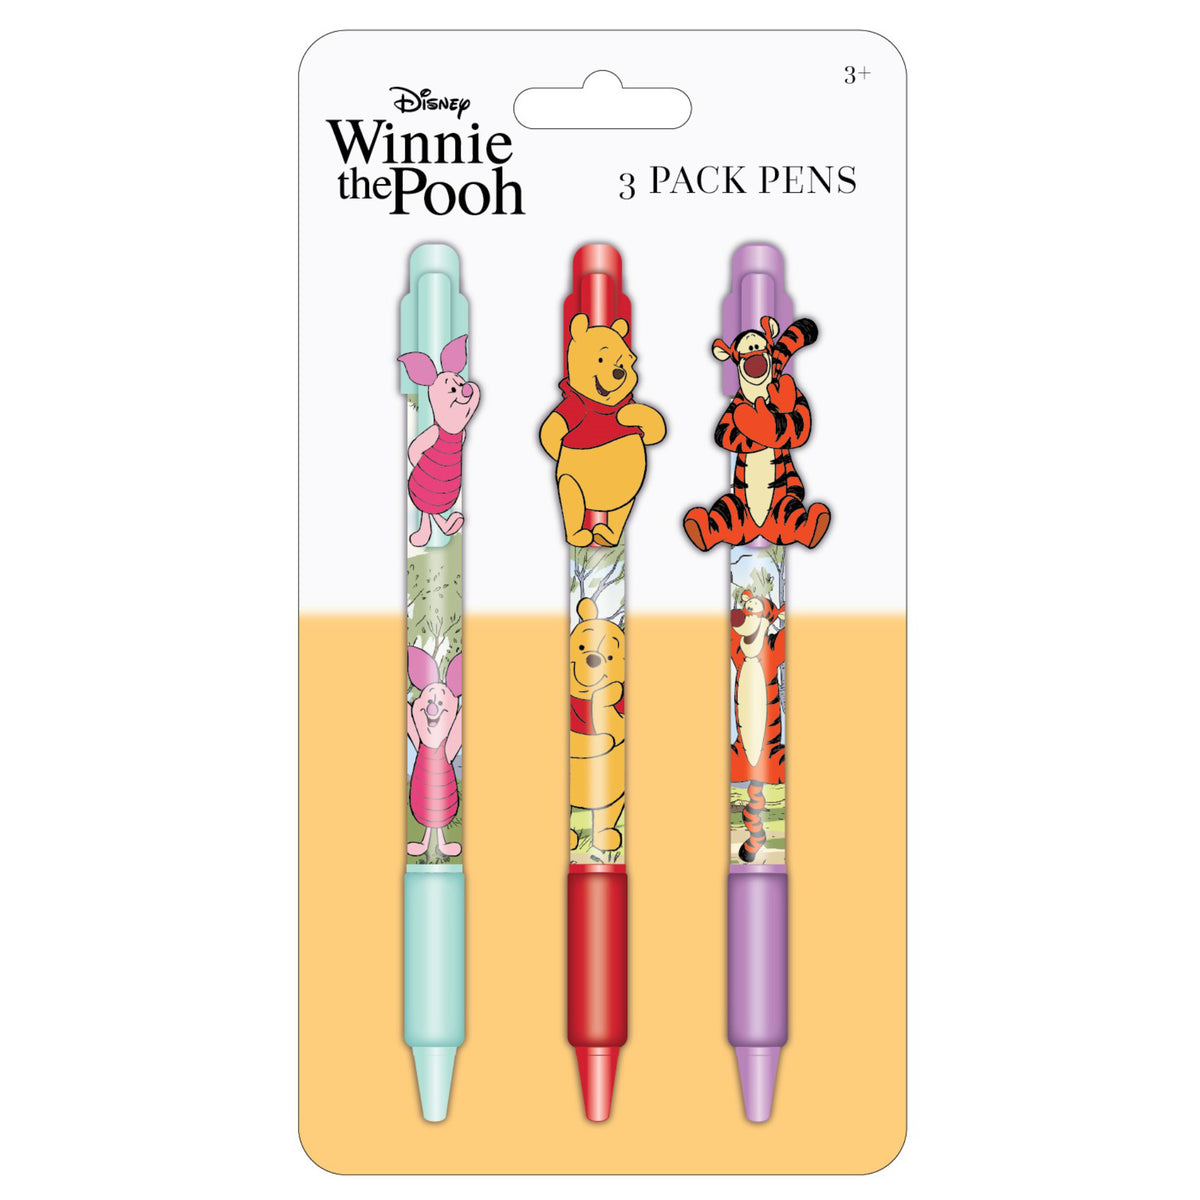 Winnie the Pooh 3 Pack Pen Set